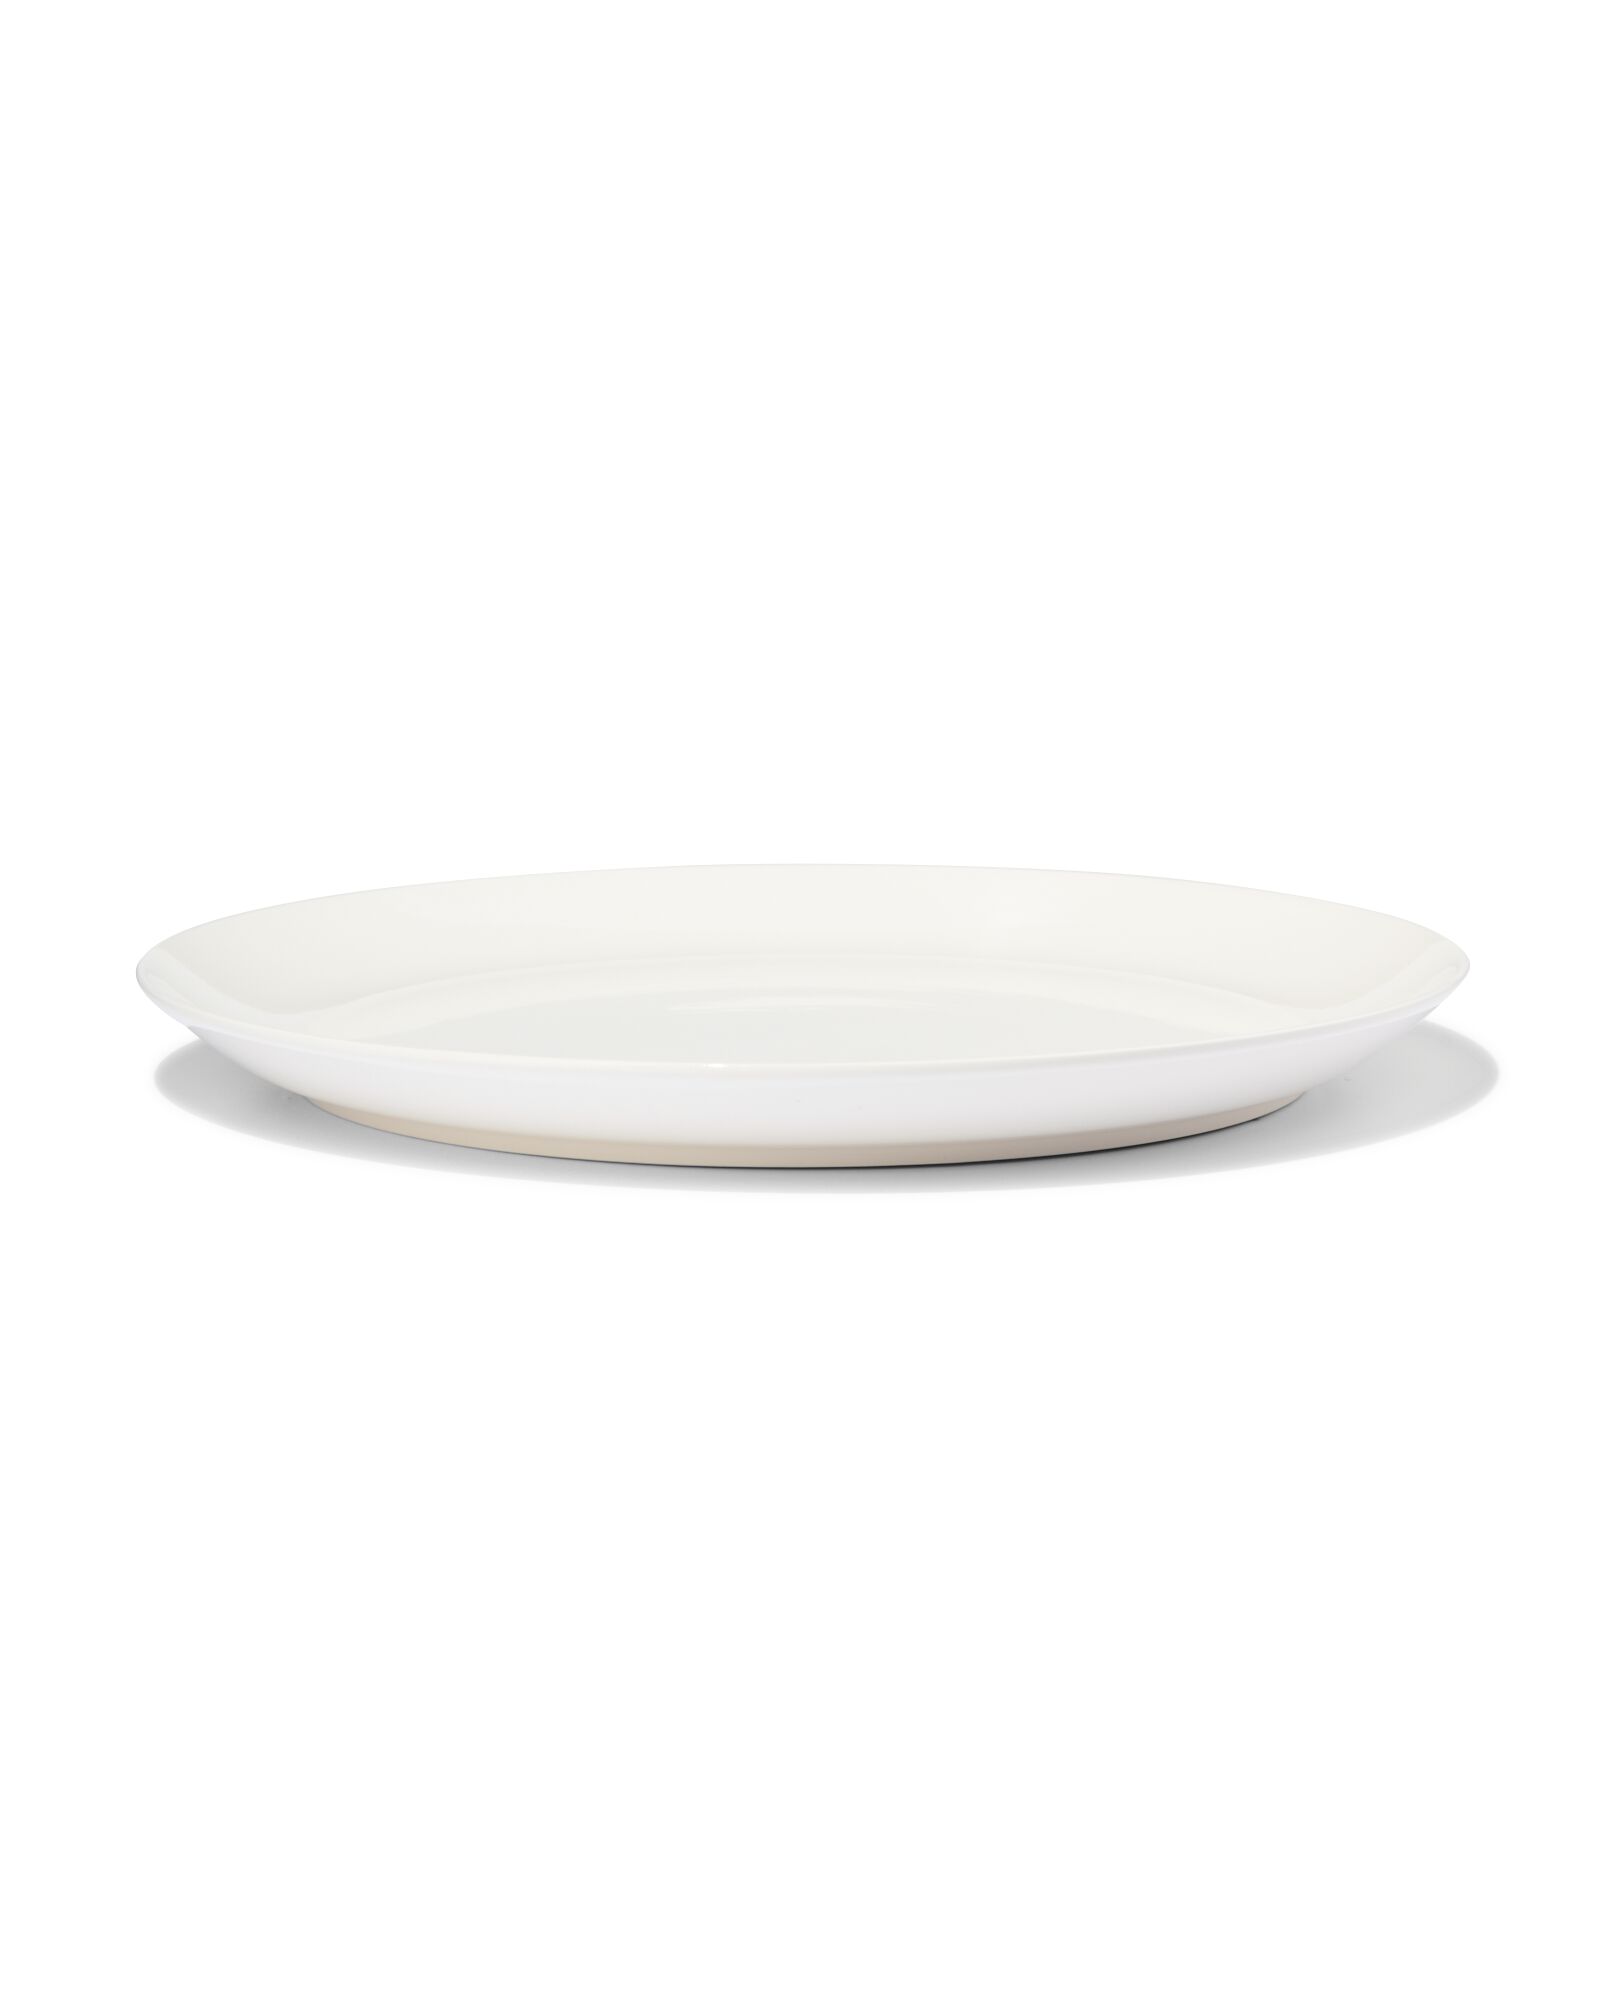 hema assiette plate ø26cm - new bone blanc - vaisselle dépareillée (blanc)